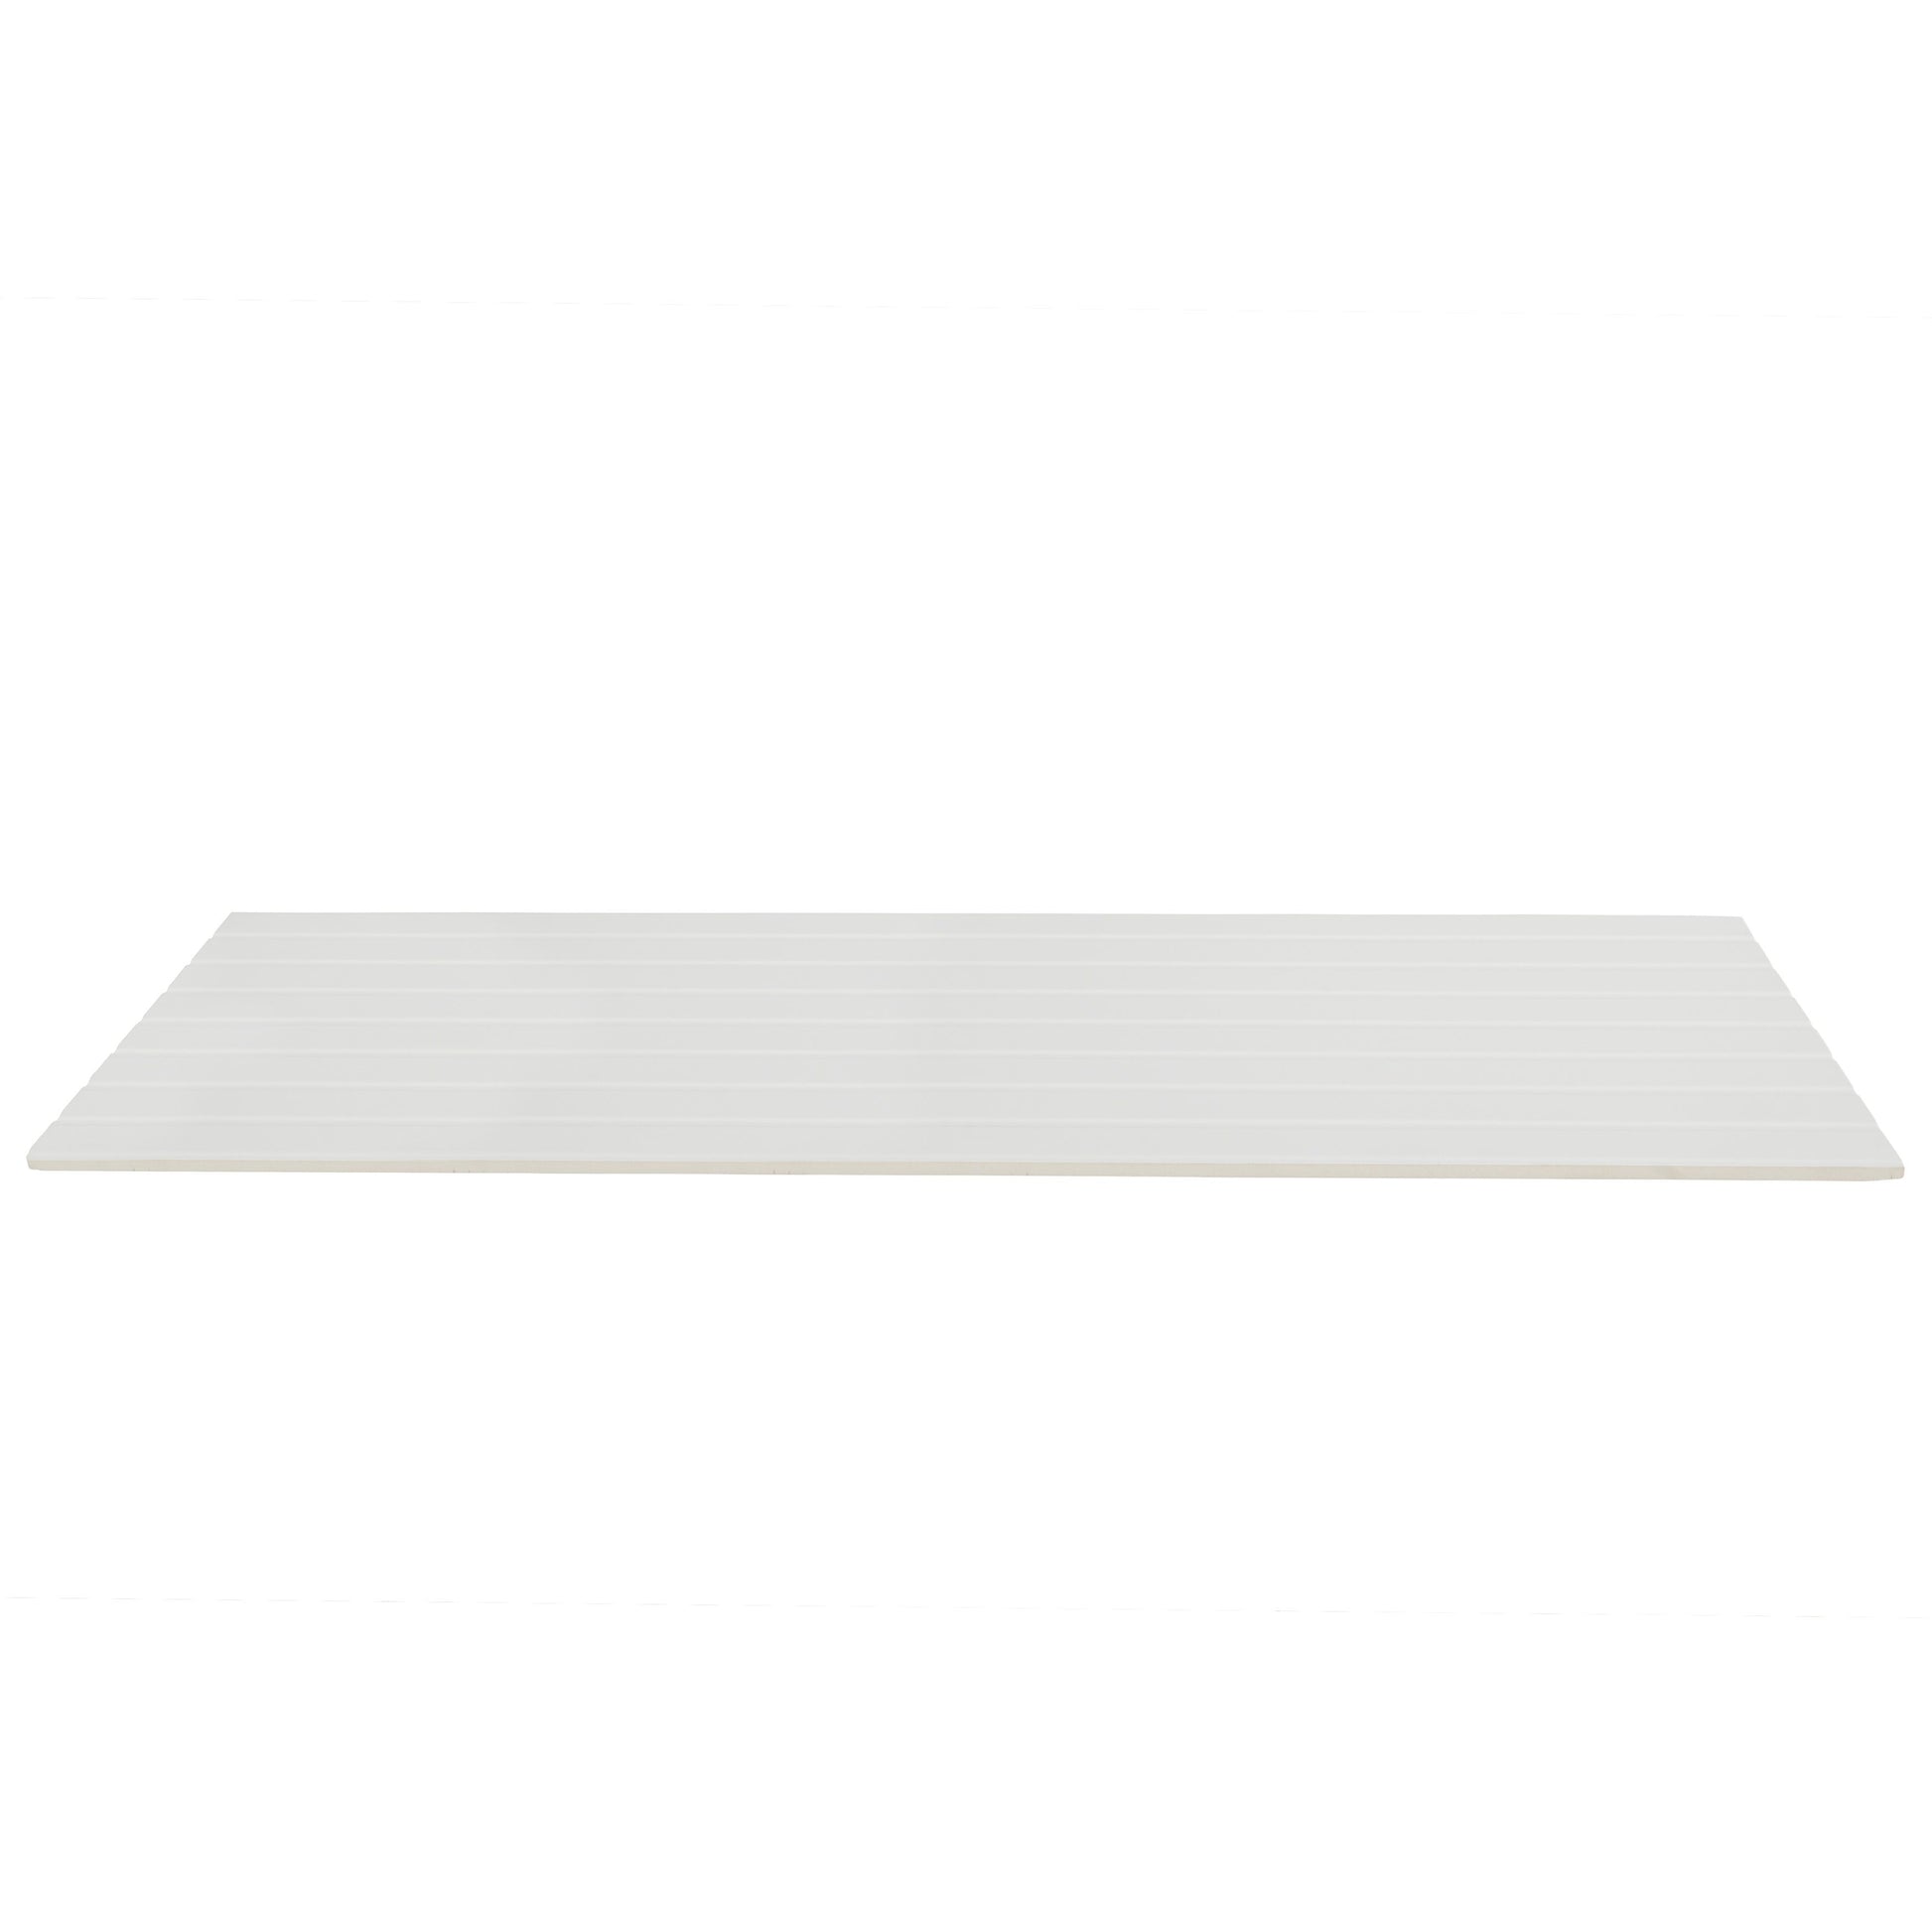 14x36 Shiplap White wood look wall tile - Industry Tile